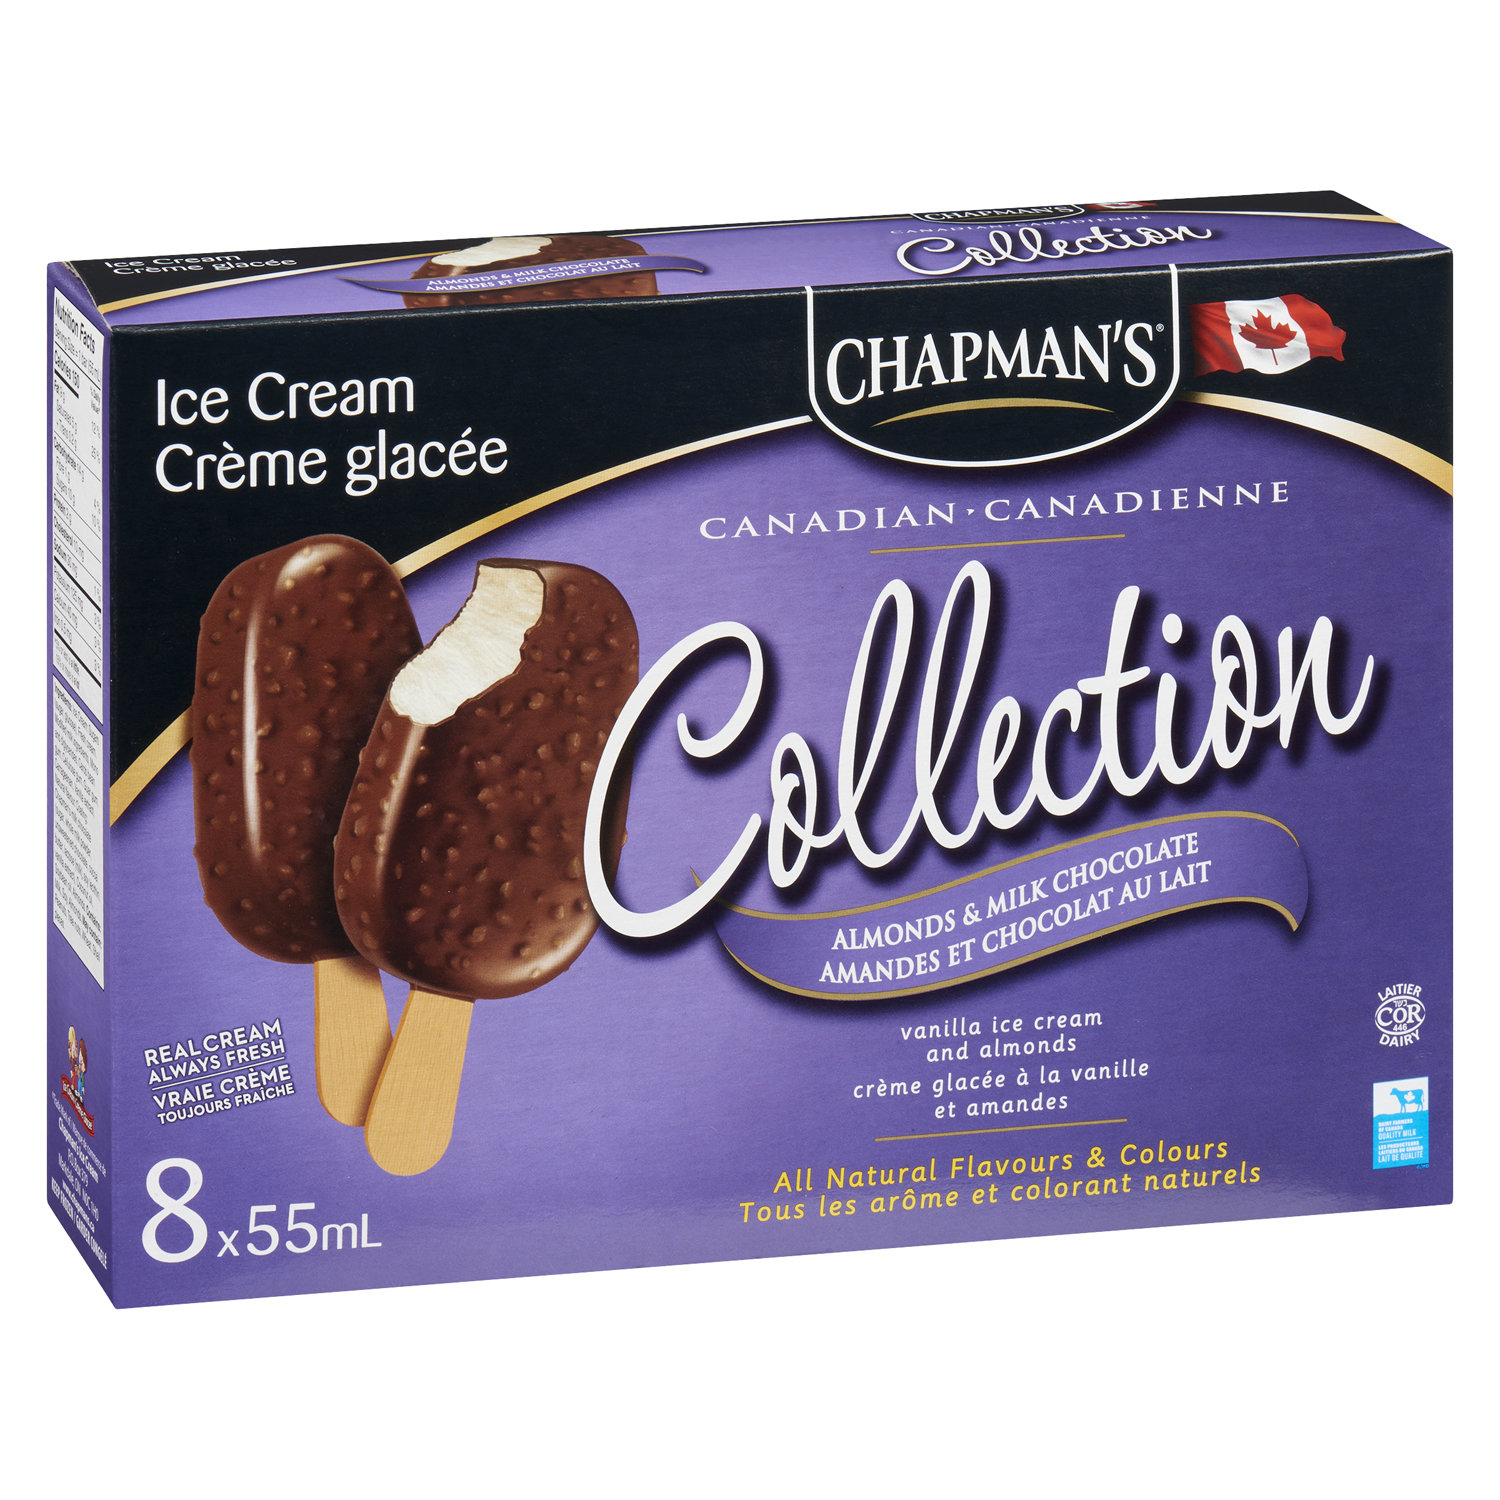 Sweet vindication for Chapman's Ice Cream